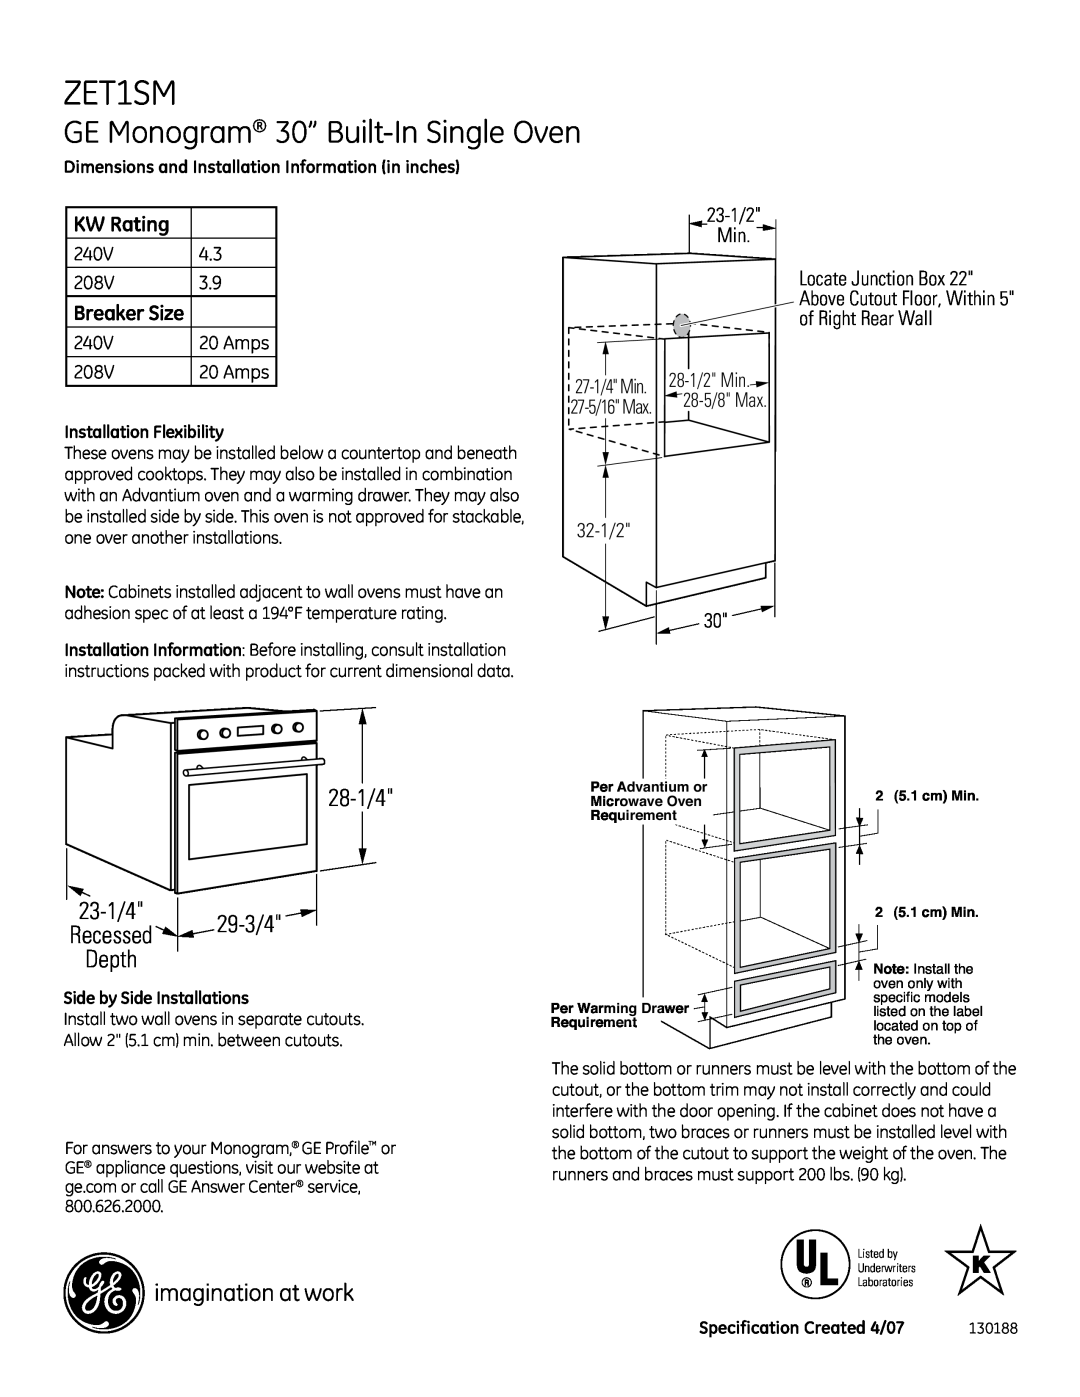 GE ZET1SM installation instructions GE Monogram 30” Built-In Single Oven, KW Rating, 28-1/4 23-1/4 29-3/4 Recessed Depth 